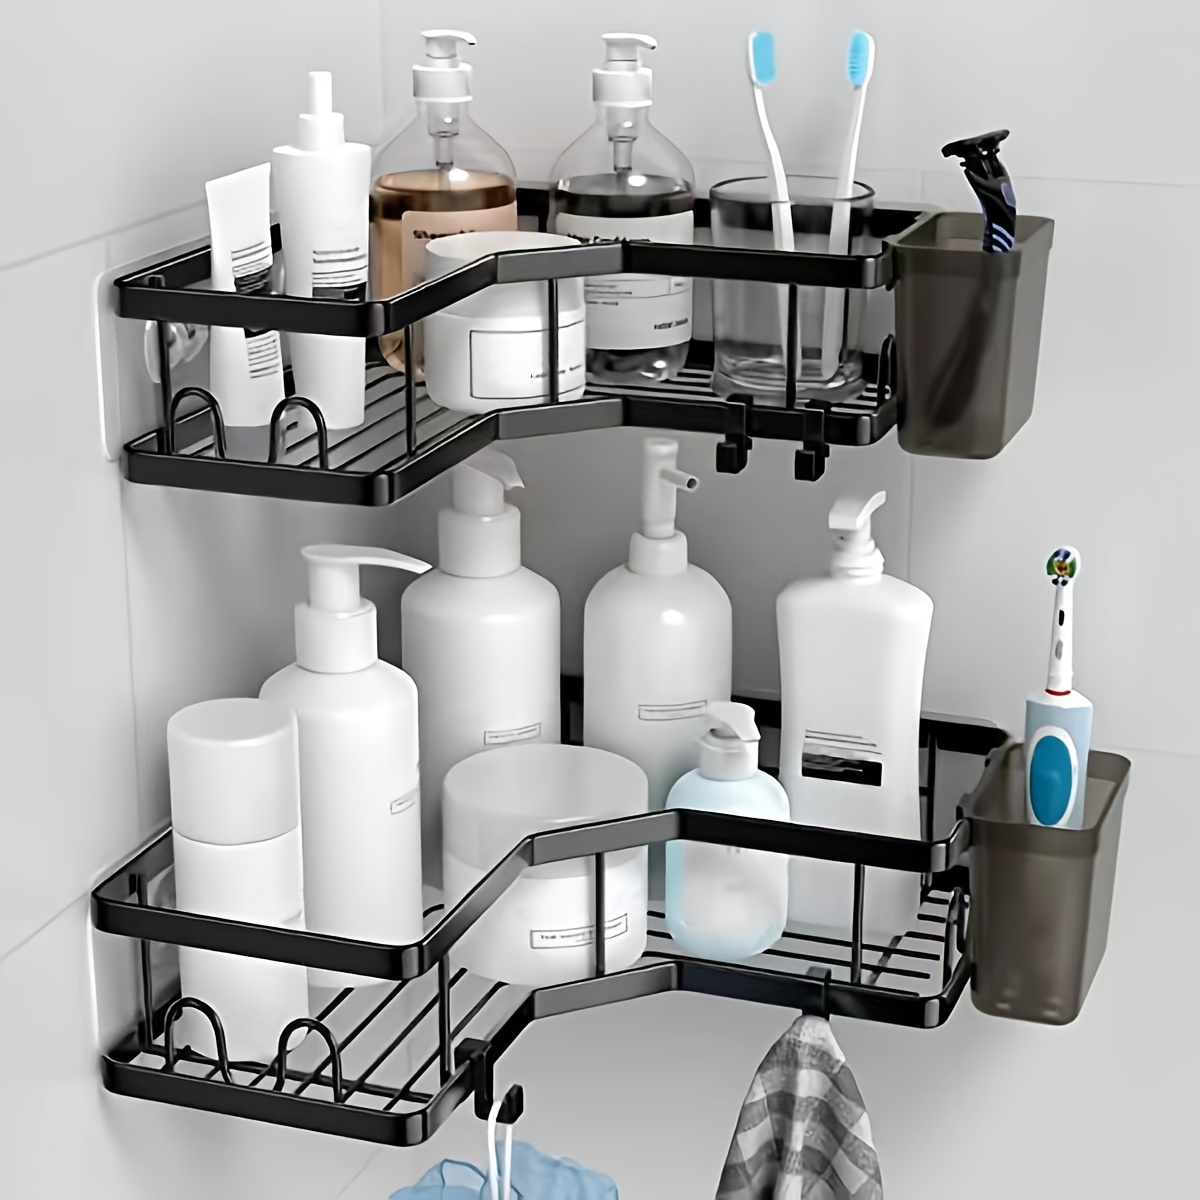 Laigoo Adhesive Floating Shelves Non-Drilling, Set of 3, Display